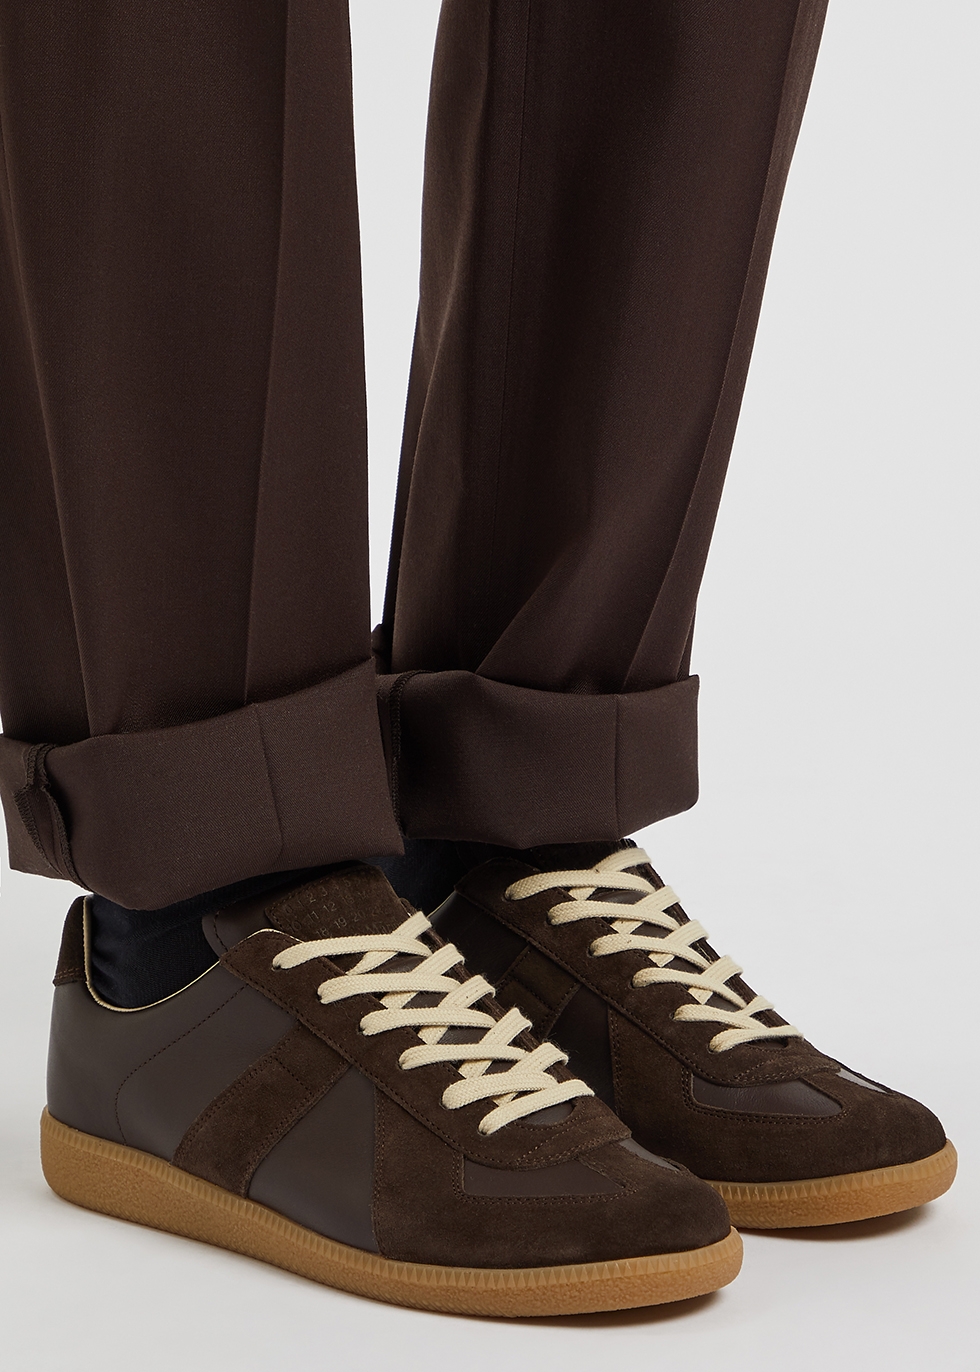 Marty Fielding Bemærk venligst Watchful Maison Margiela Replica brown leather sneakers - Harvey Nichols